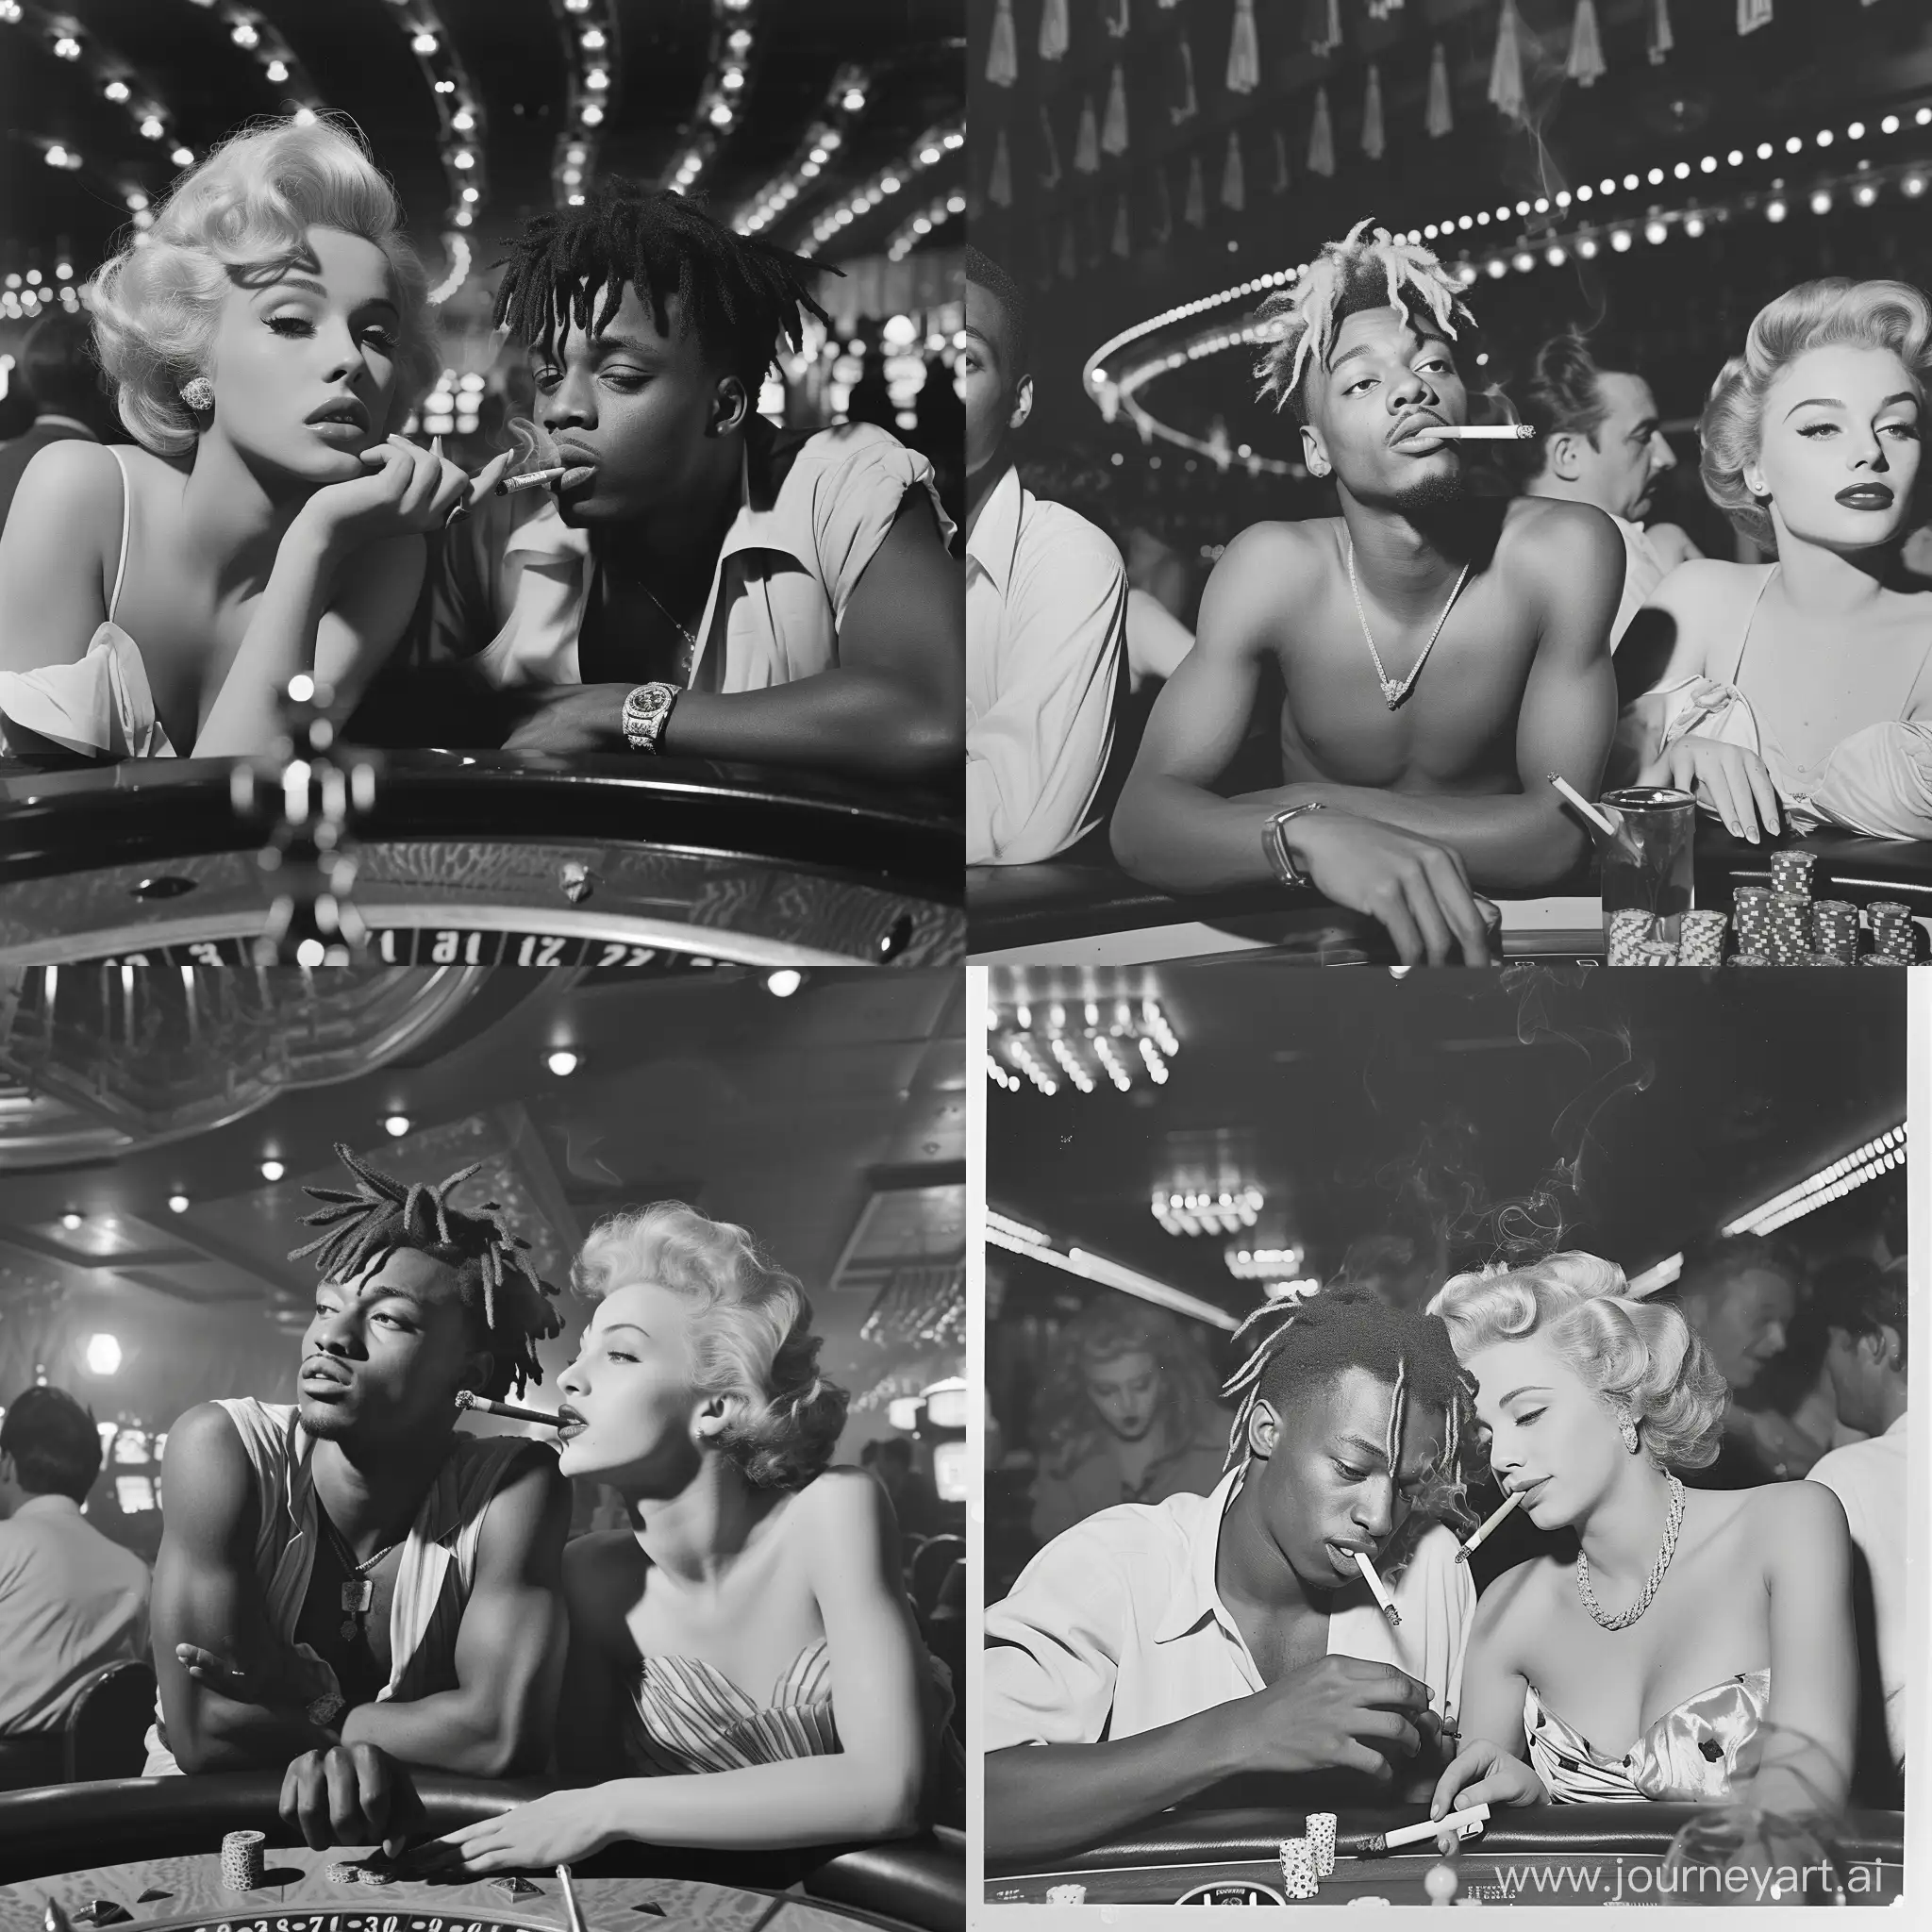 Vintage-Encounter-Juice-WRLD-and-Marilyn-Monroe-in-1950s-Casino